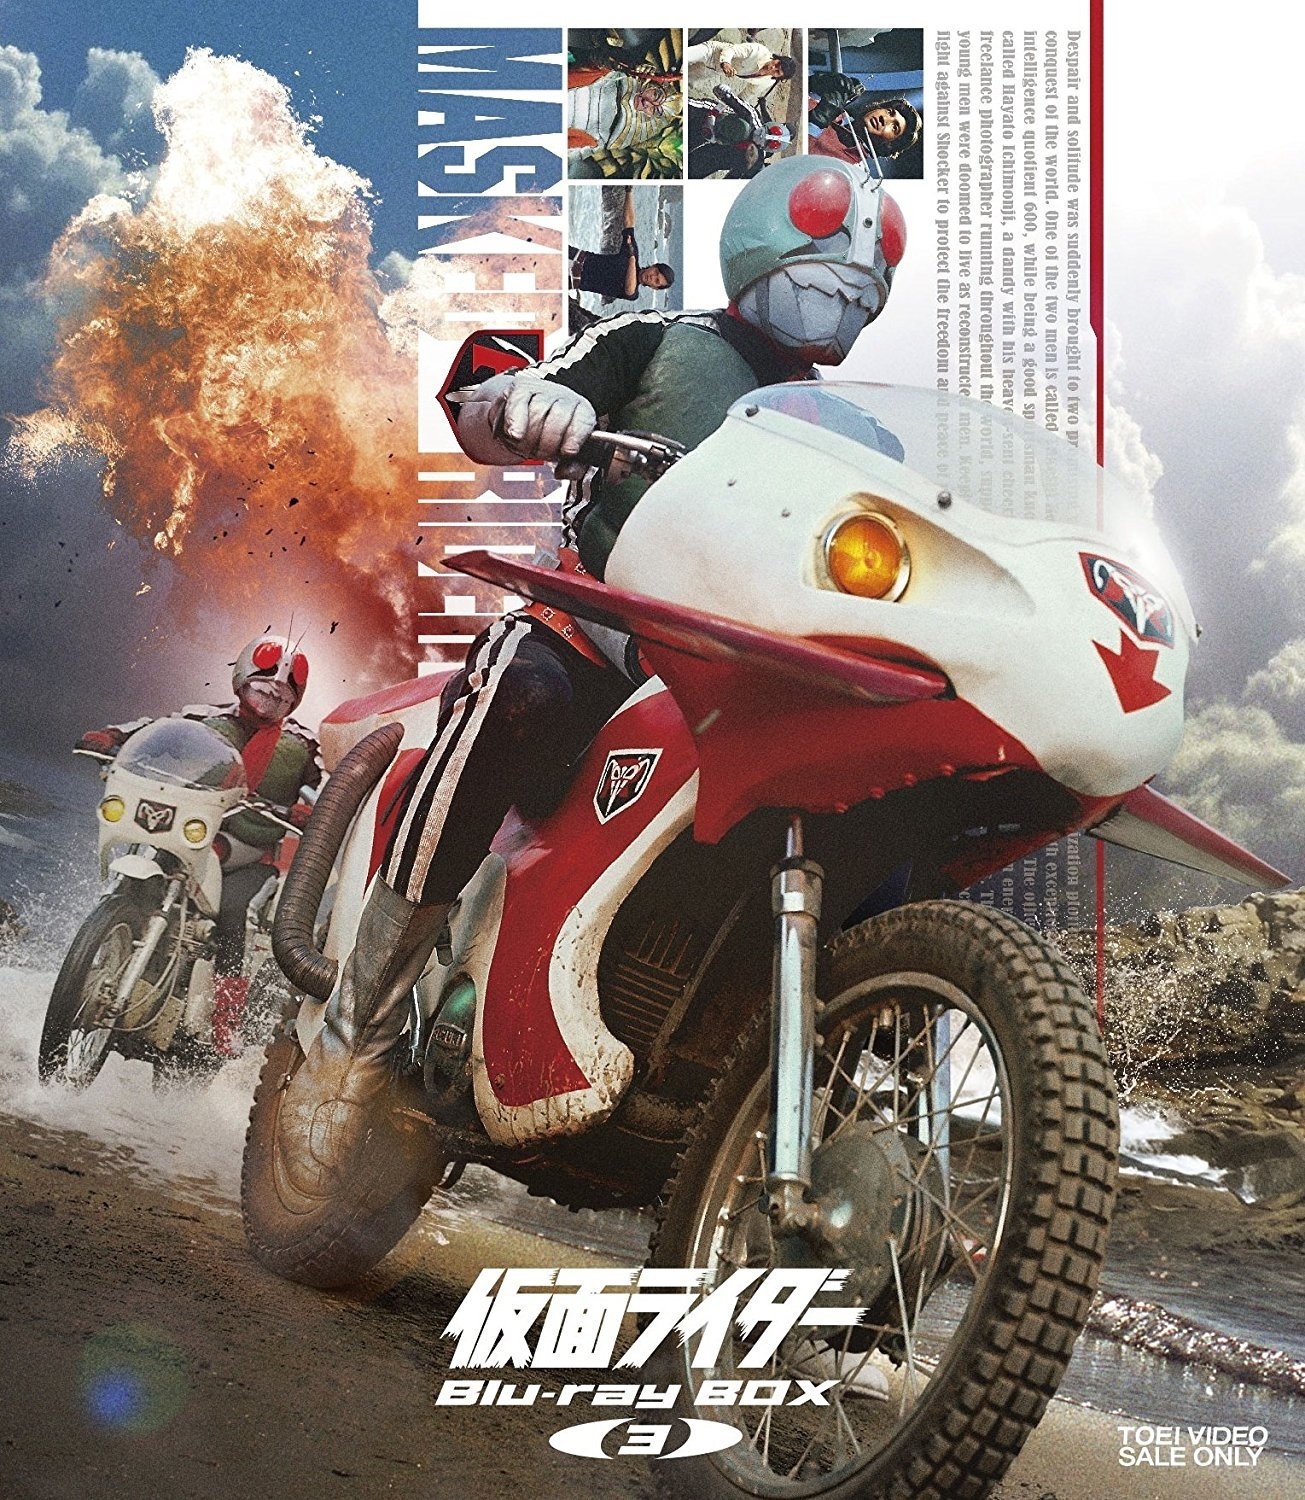 Kamen Rider: Blu-Ray Box 3 Blu-ray (仮面ライダー) (Japan)